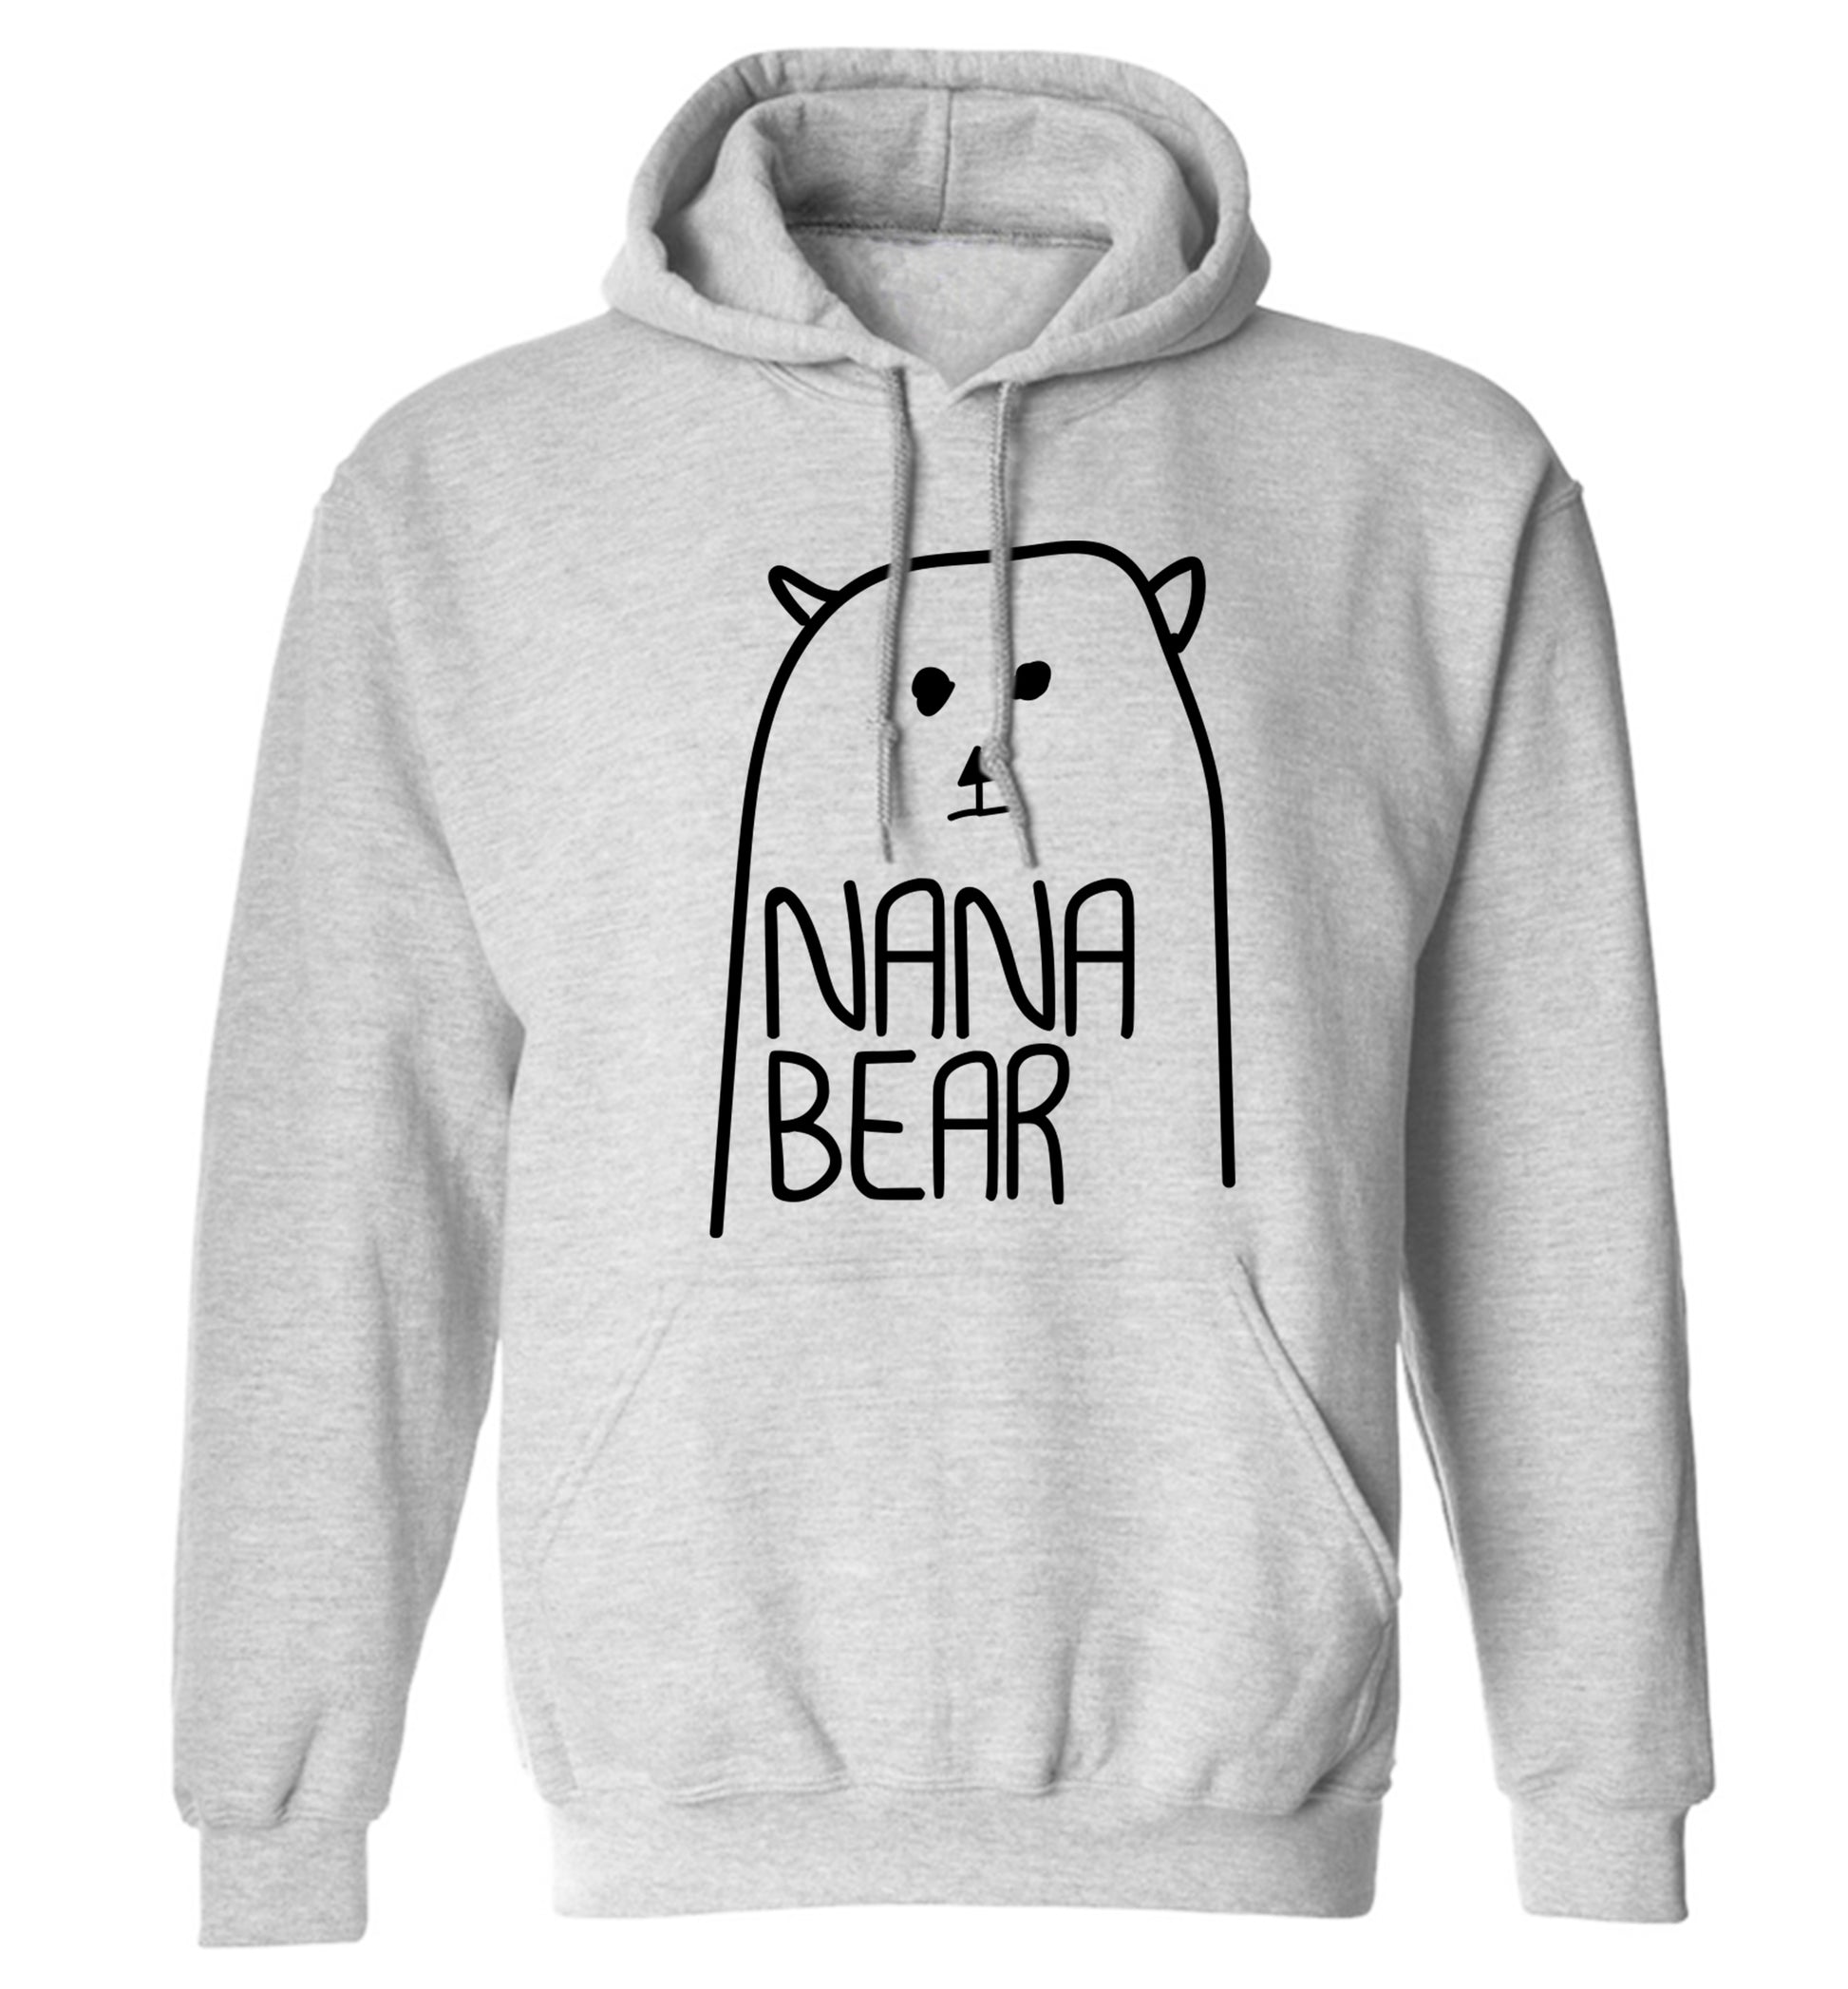 Nana bear adults unisex grey hoodie 2XL